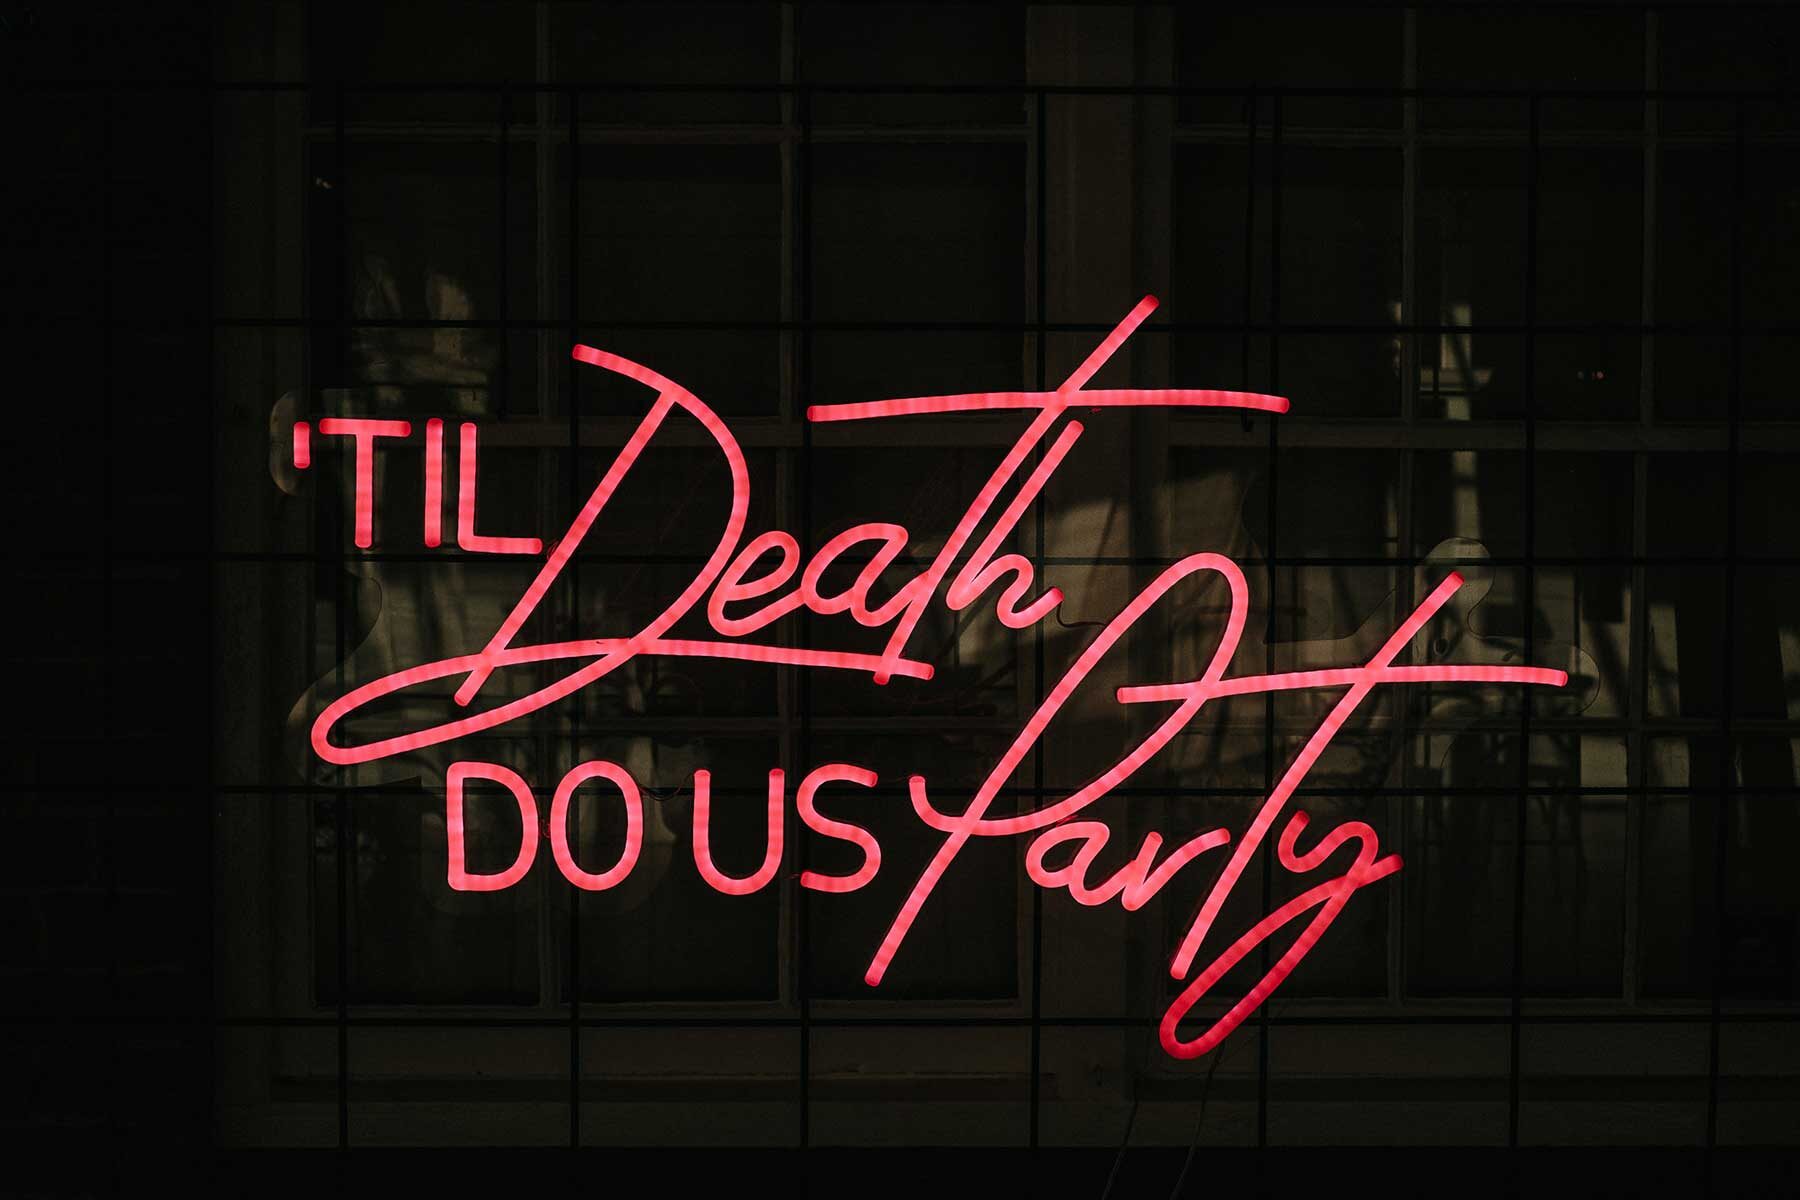 til death do us party neon sign